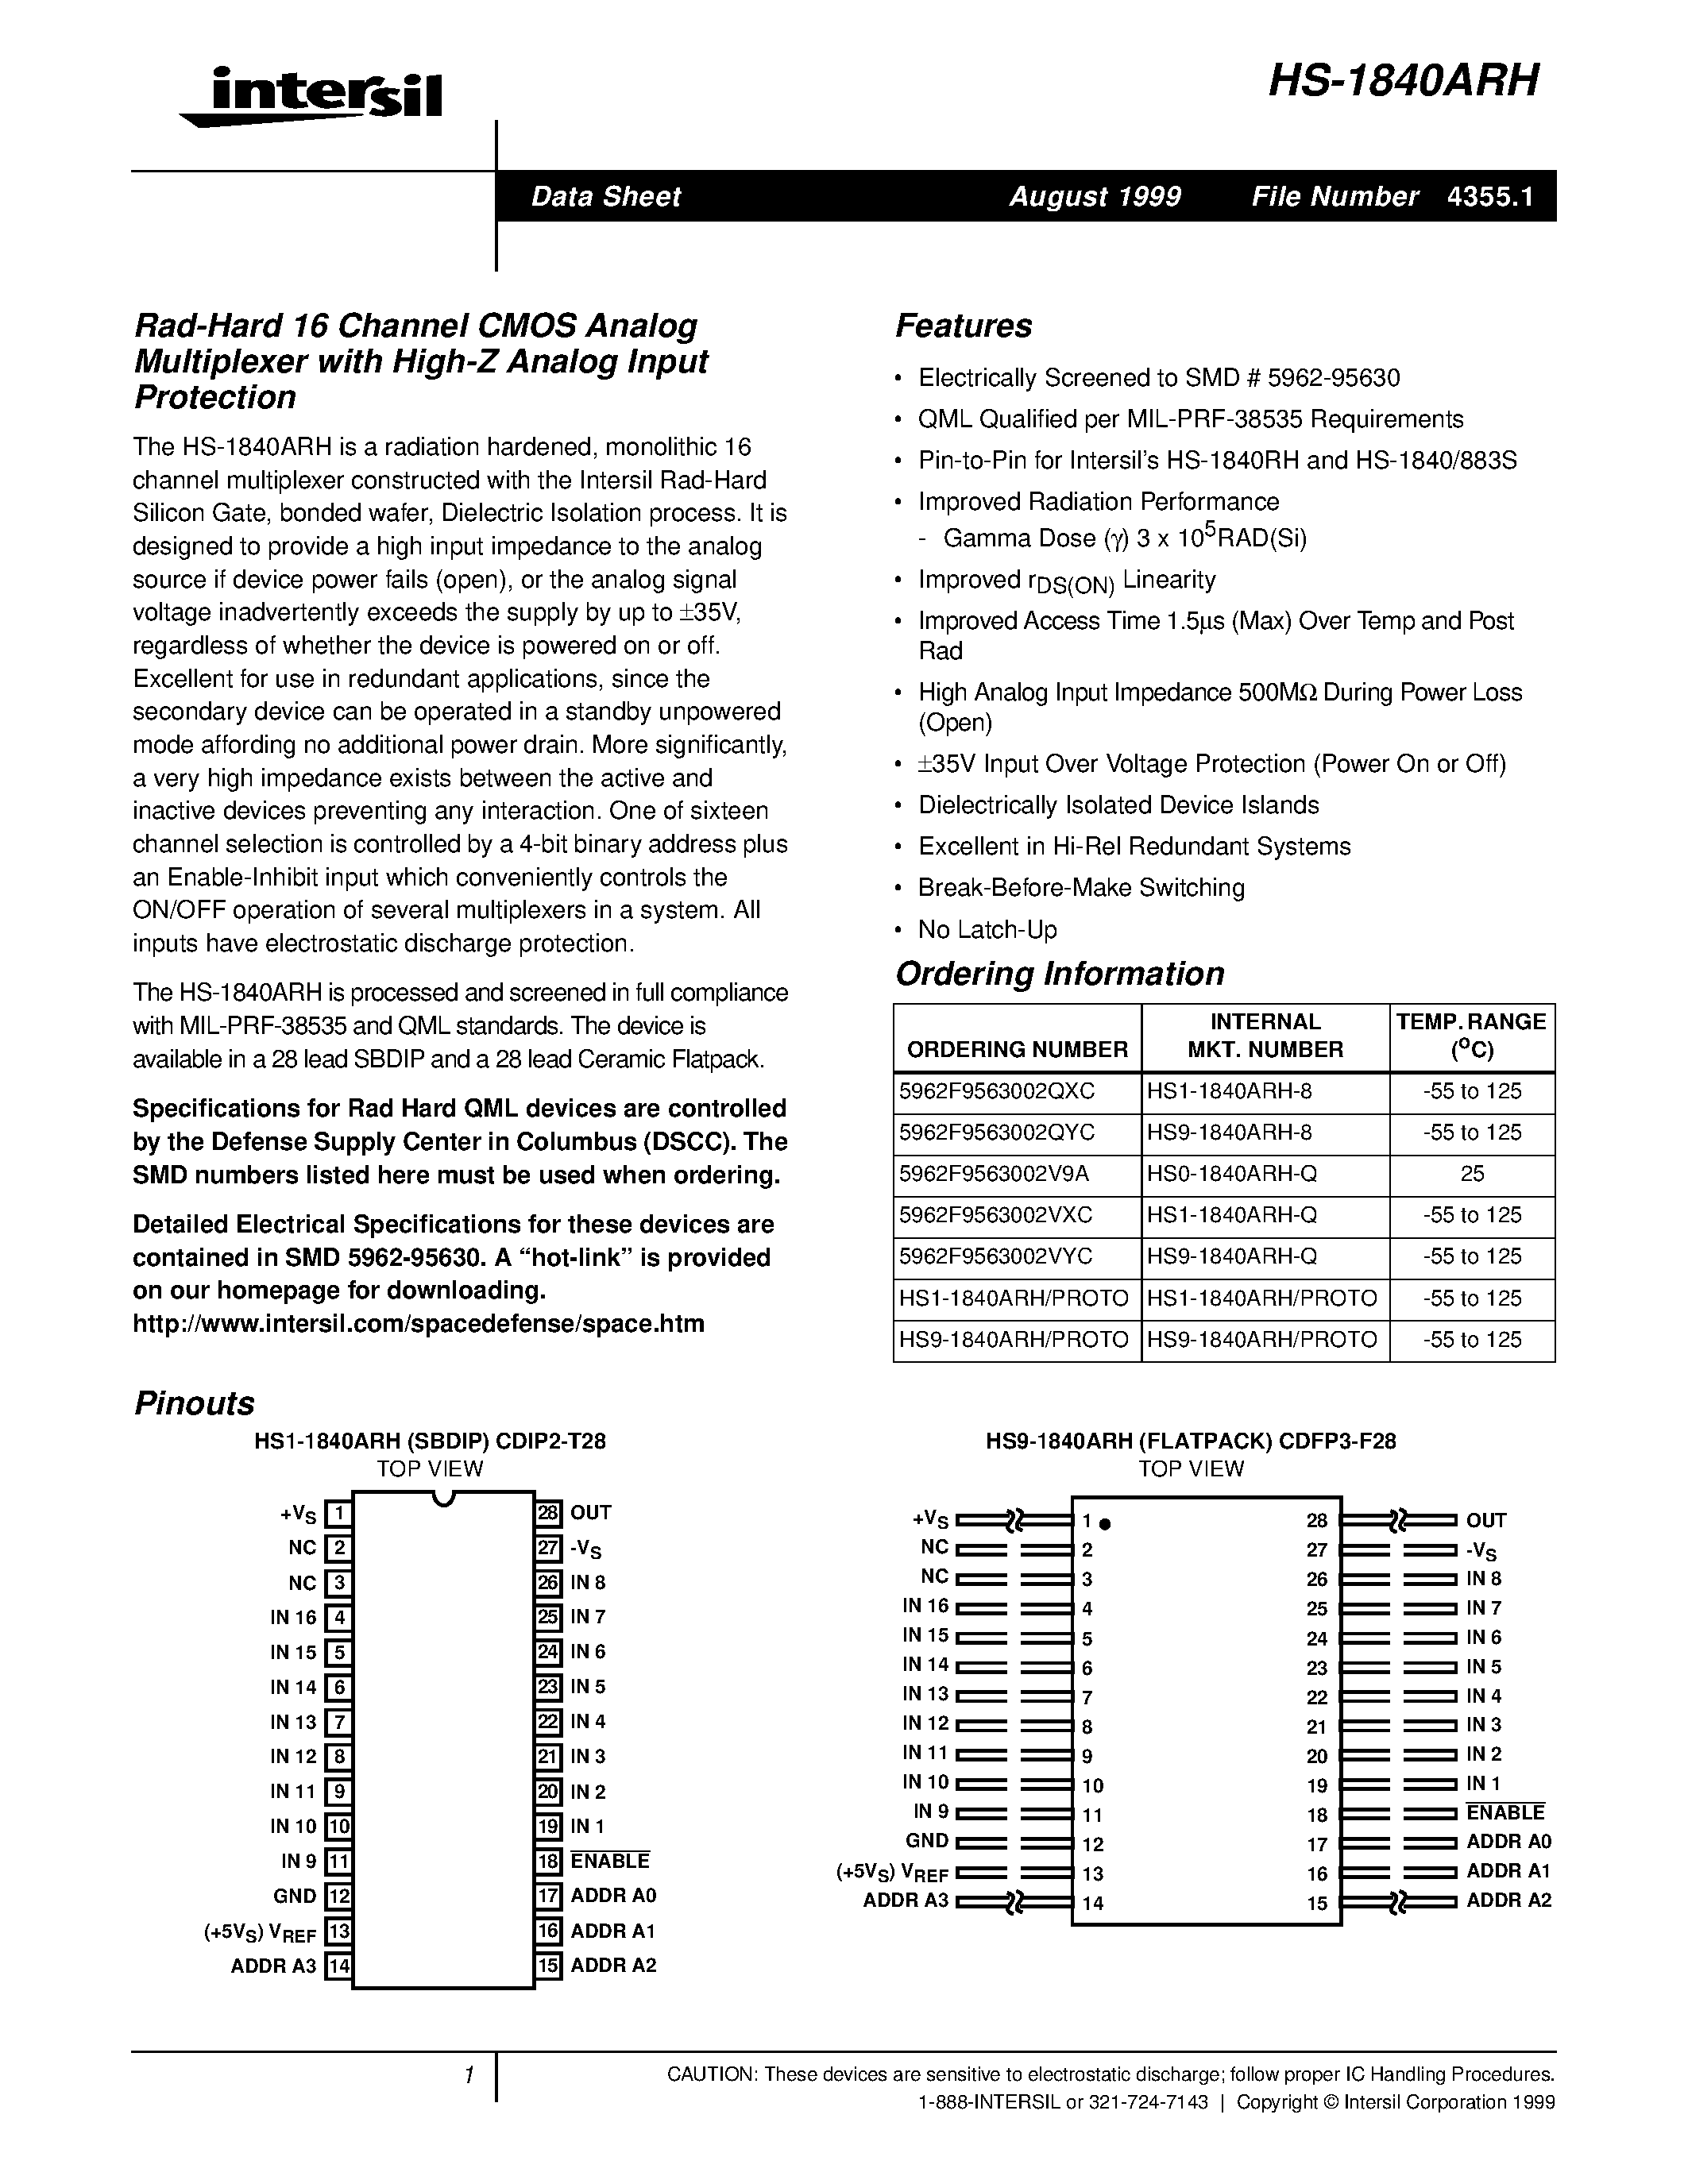 Даташит 5962F9563002QXC - Rad-Hard 16 Channel CMOS Analog Multiplexer with High-Z Analog Input Protection страница 1